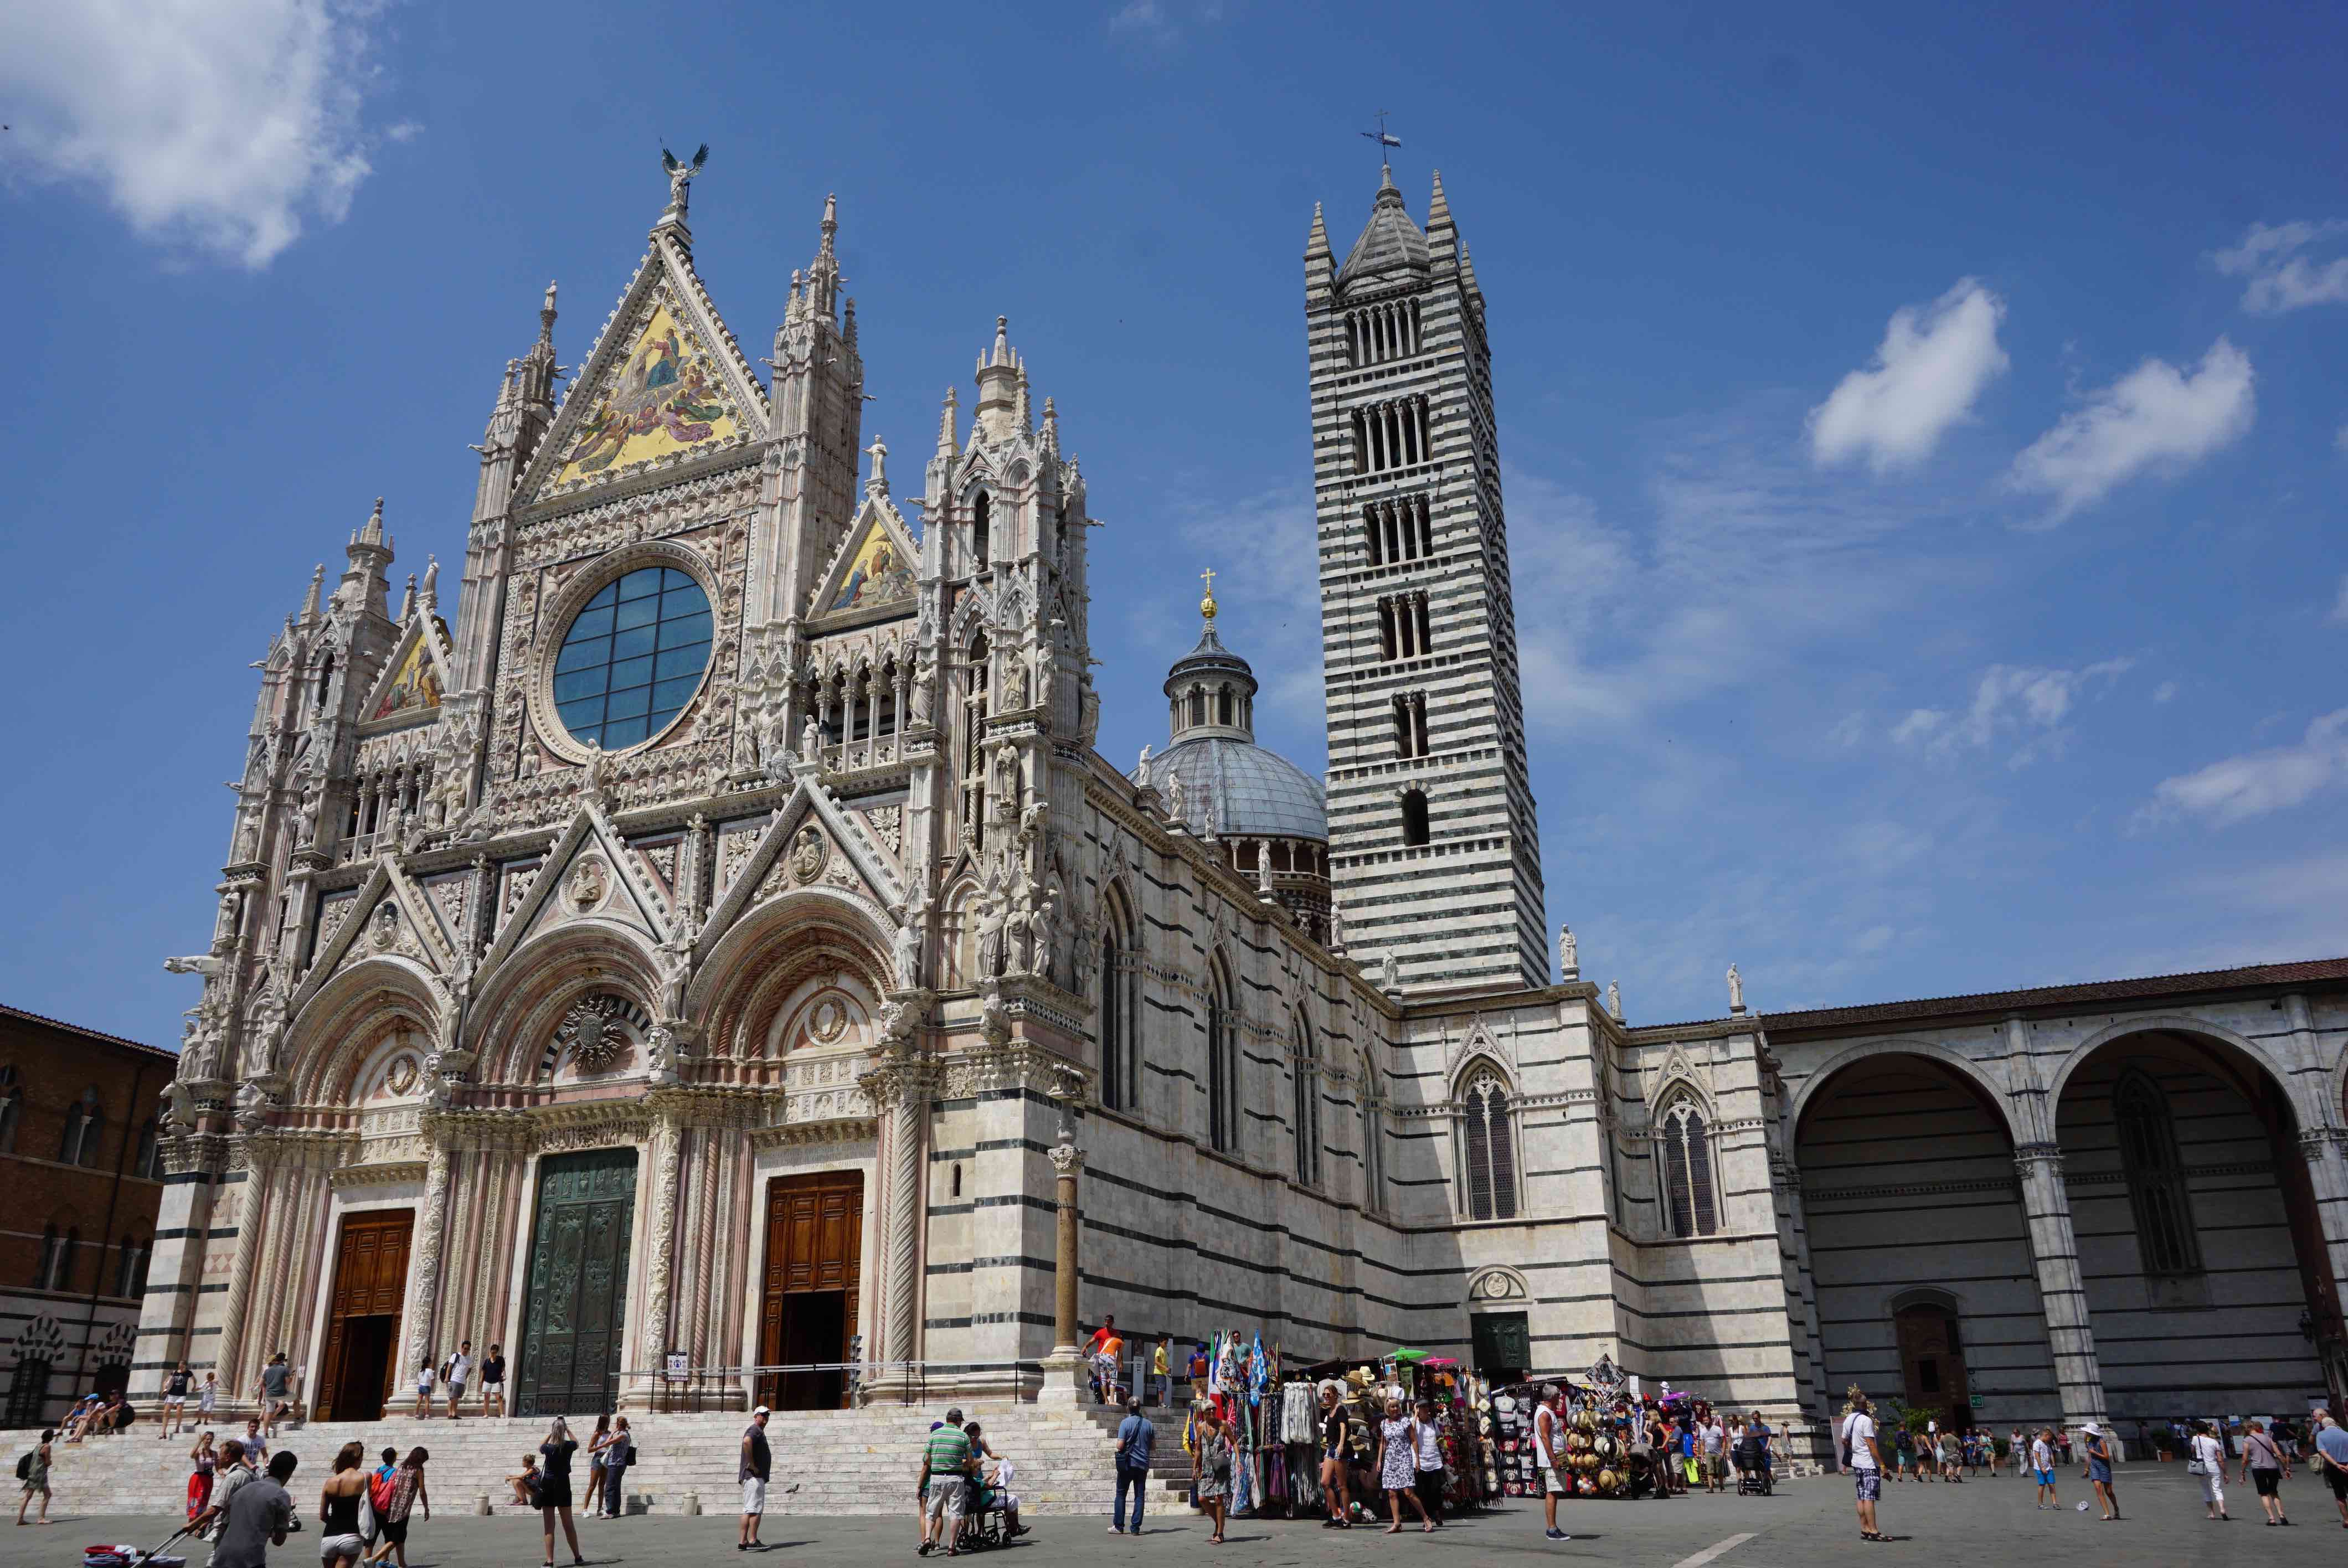 Cathedral of Santa Maria Assunta - Siena